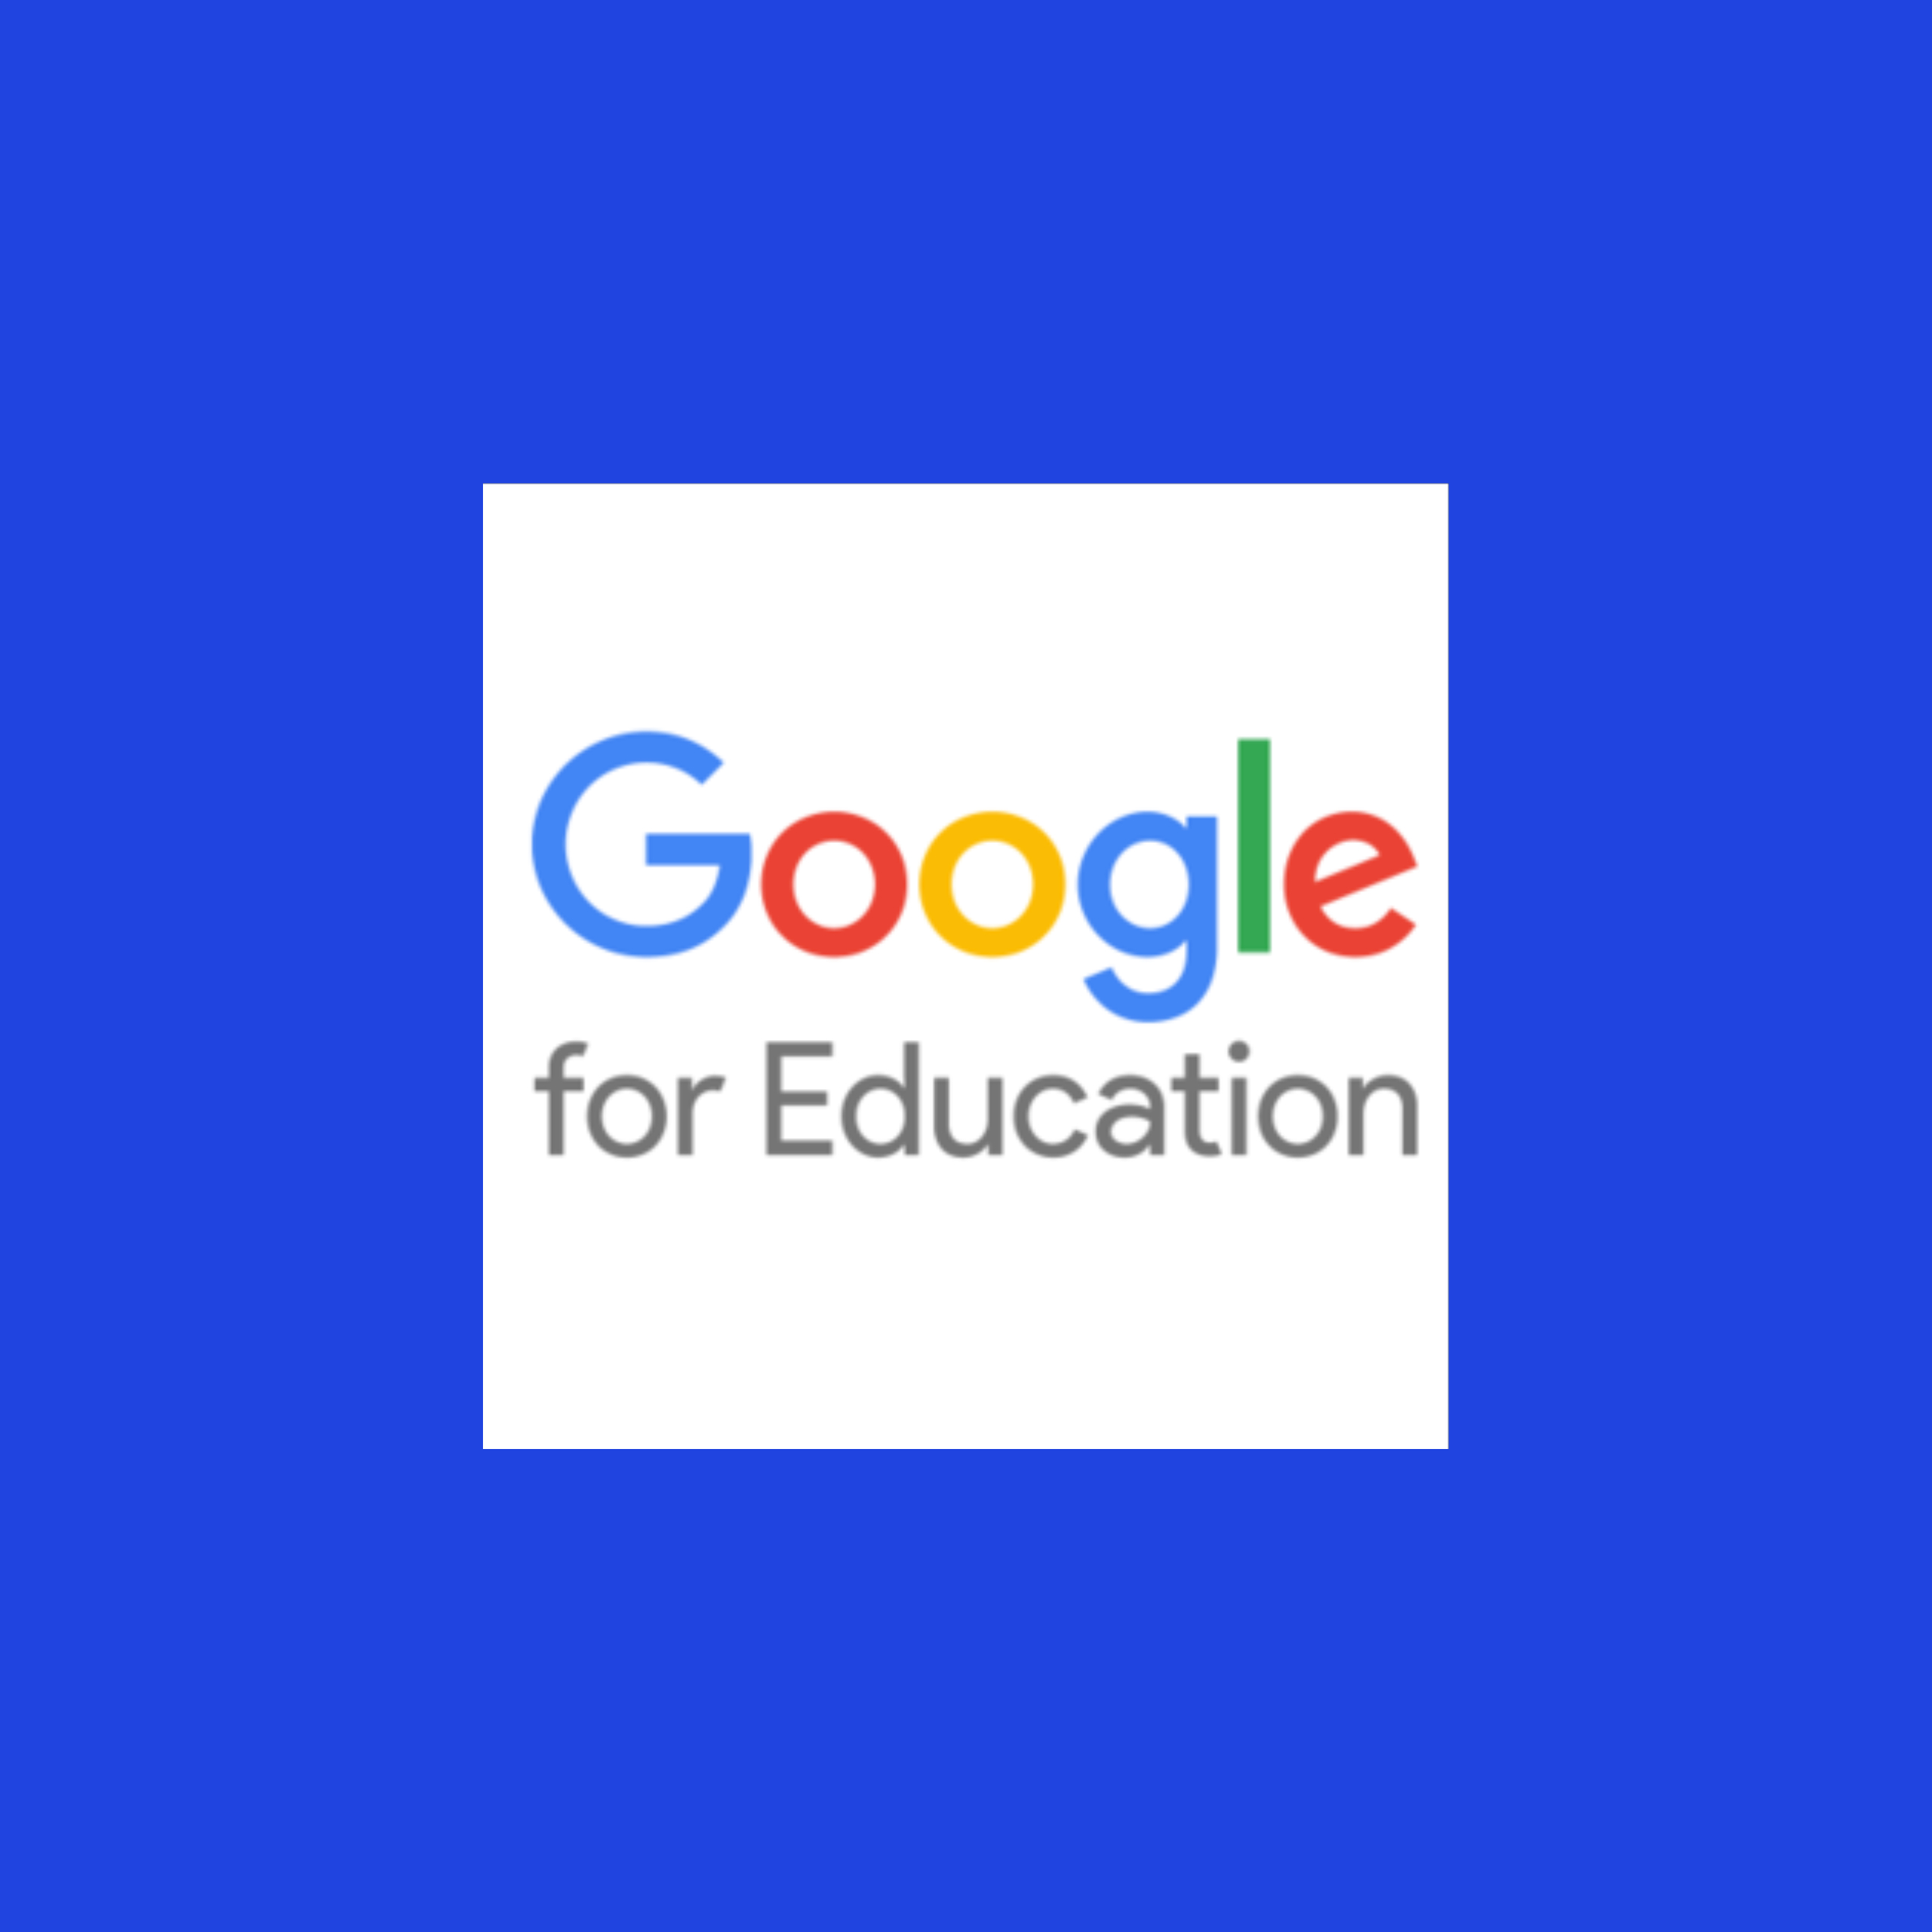 Google’s Teacher Center